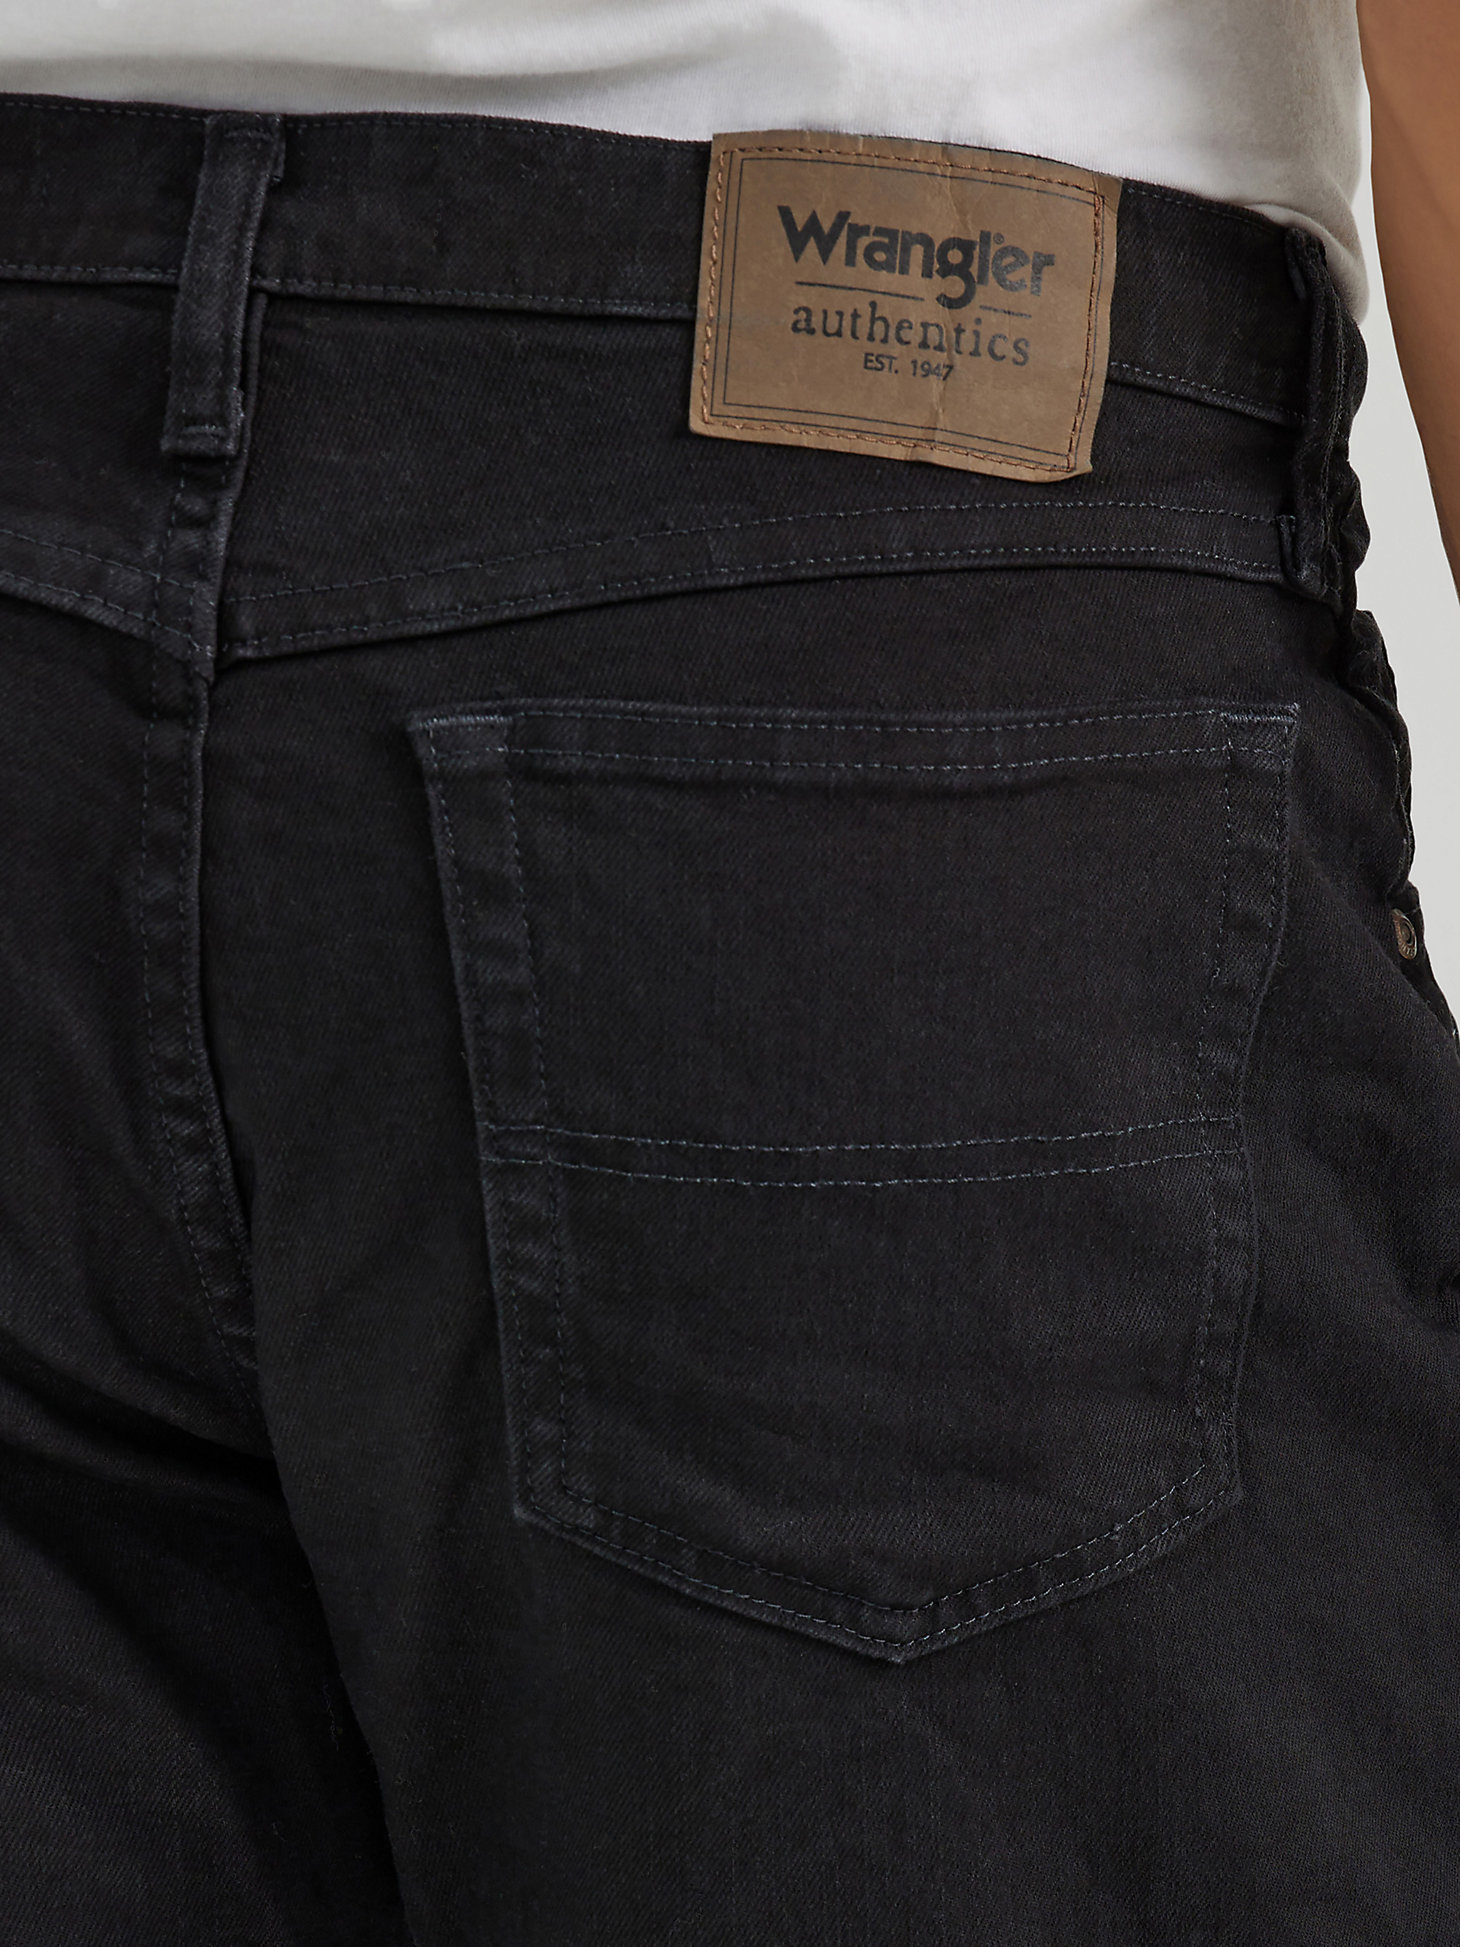 Men's Wrangler Authentics® Relaxed Fit Flex Jean in Black alternative view 2